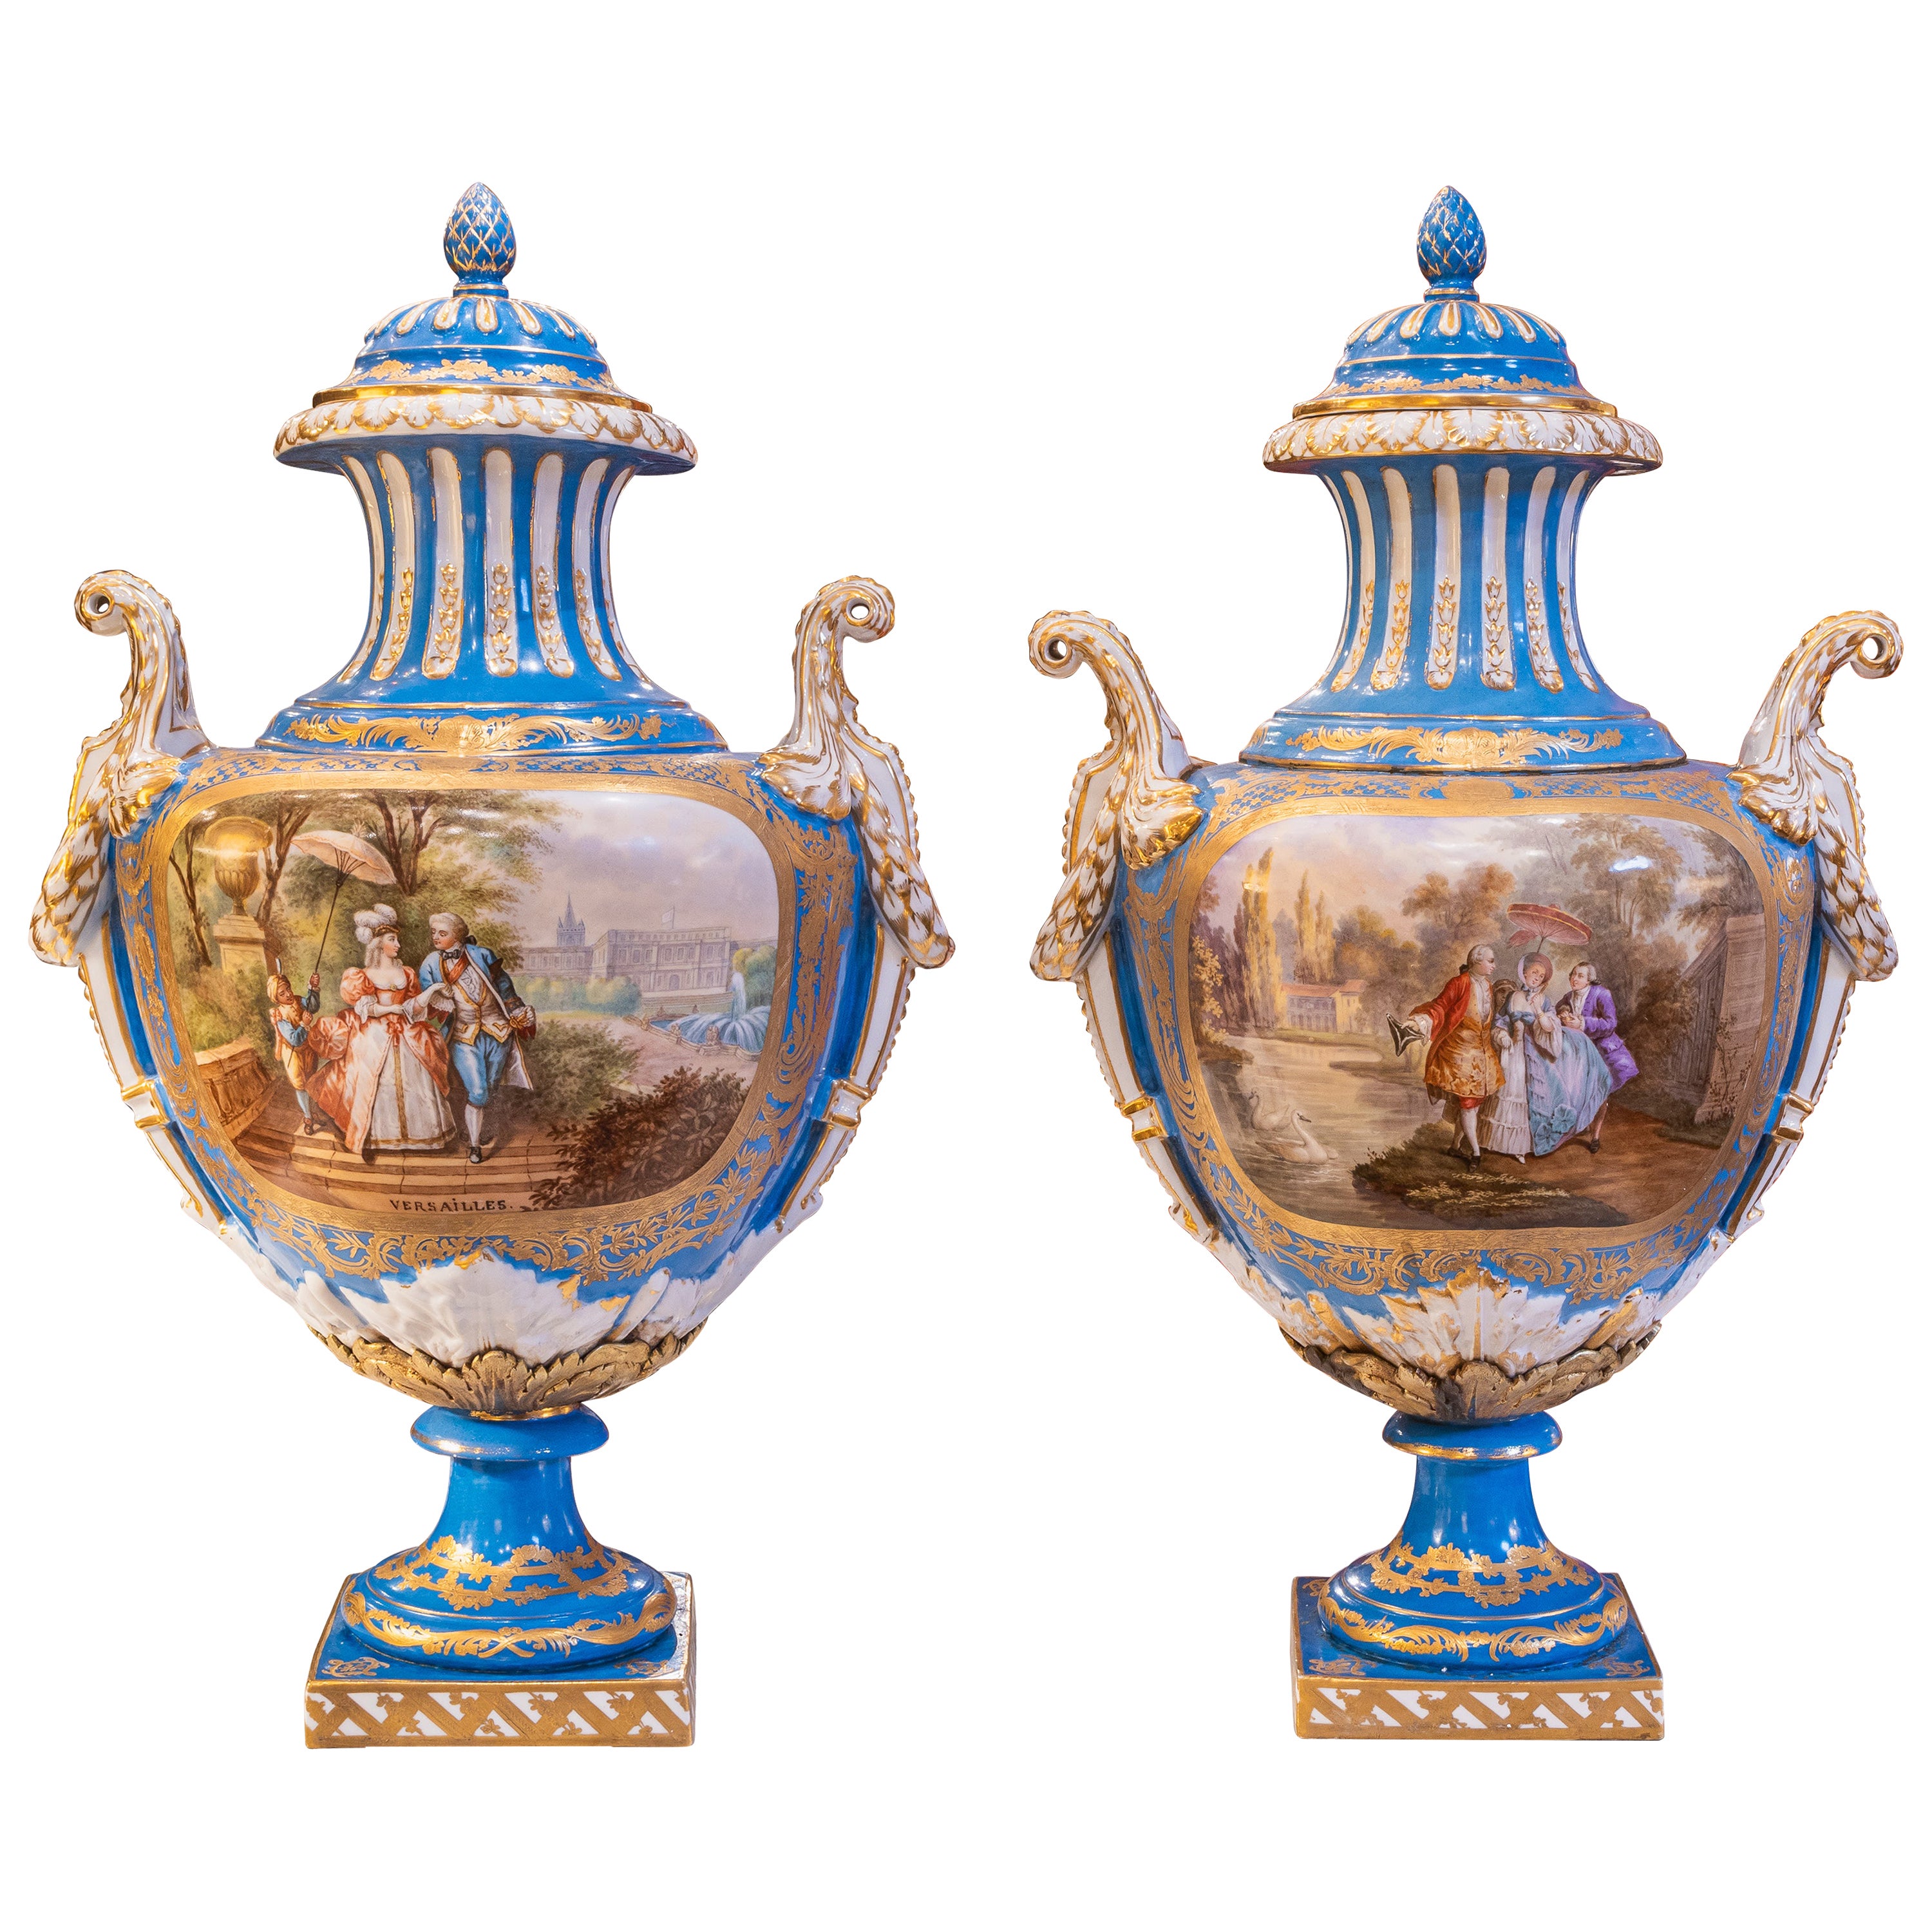 A fine pair of early 20th c  Sevre's style celeste blue palatial porcelain vases